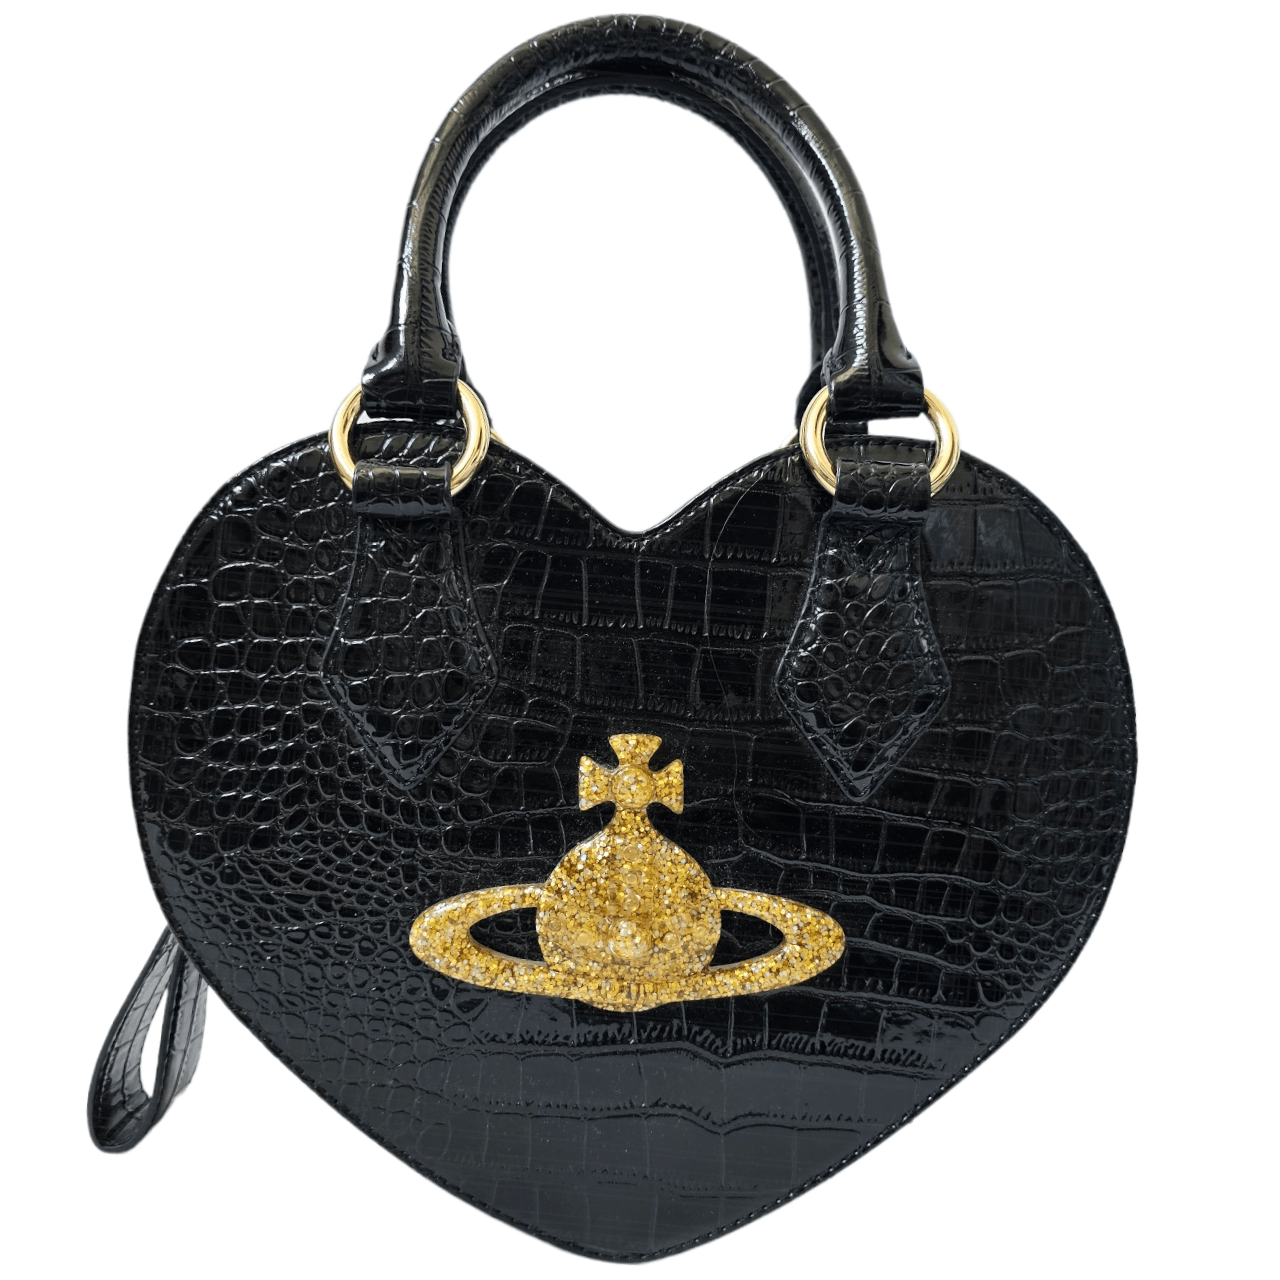 Vivienne Westwood Vivienne Westwood Black Heart Chancery Handbag ...